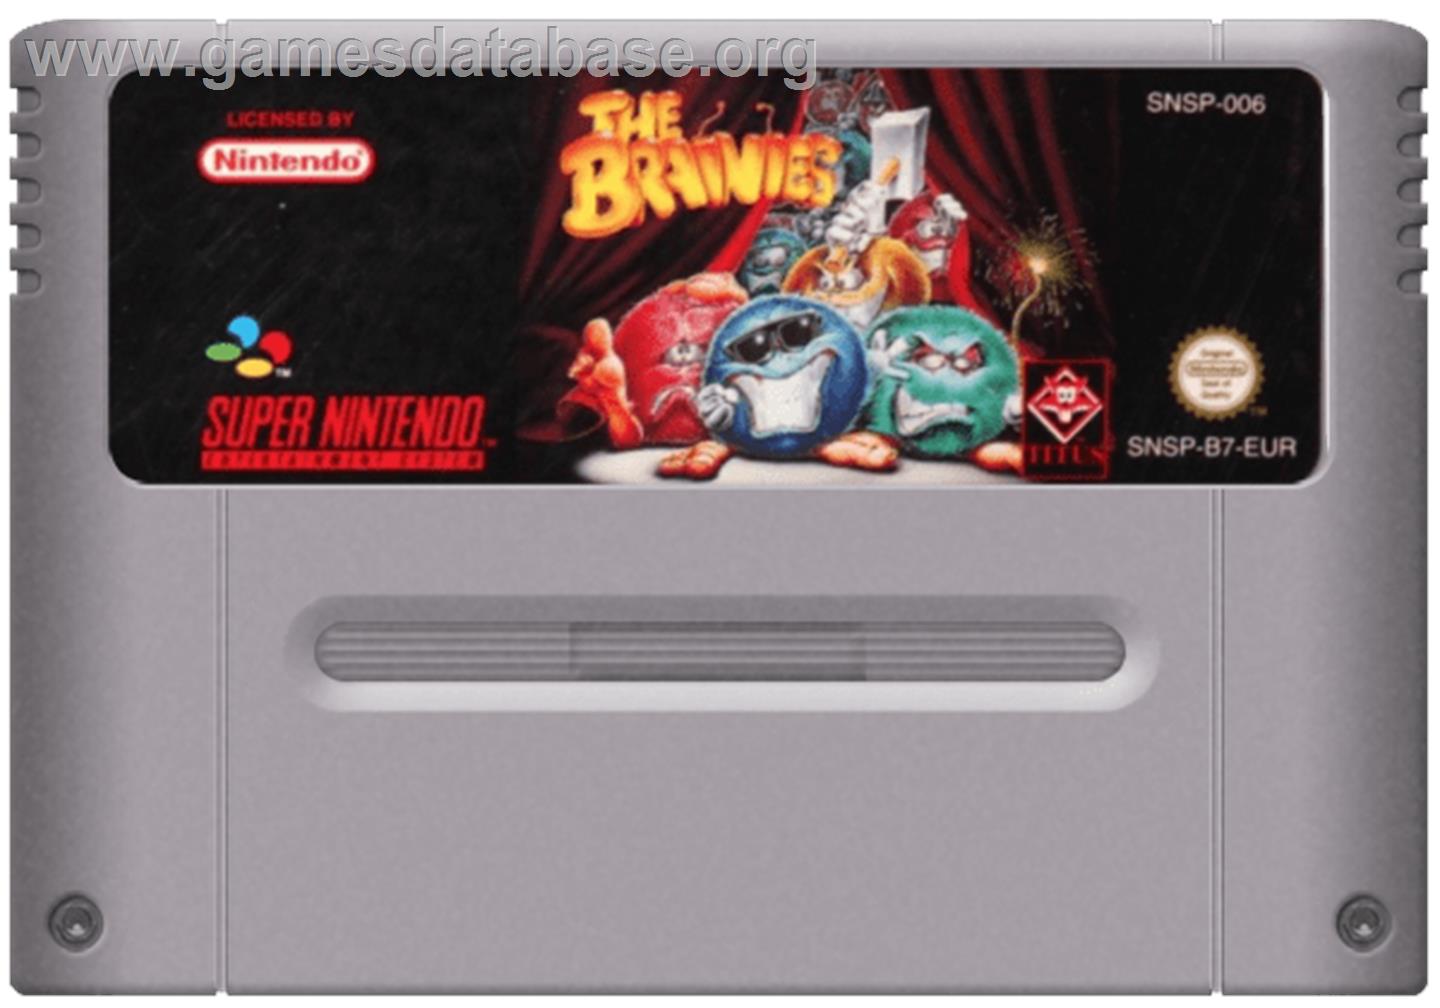 The Brainies - Nintendo SNES - Artwork - Cartridge